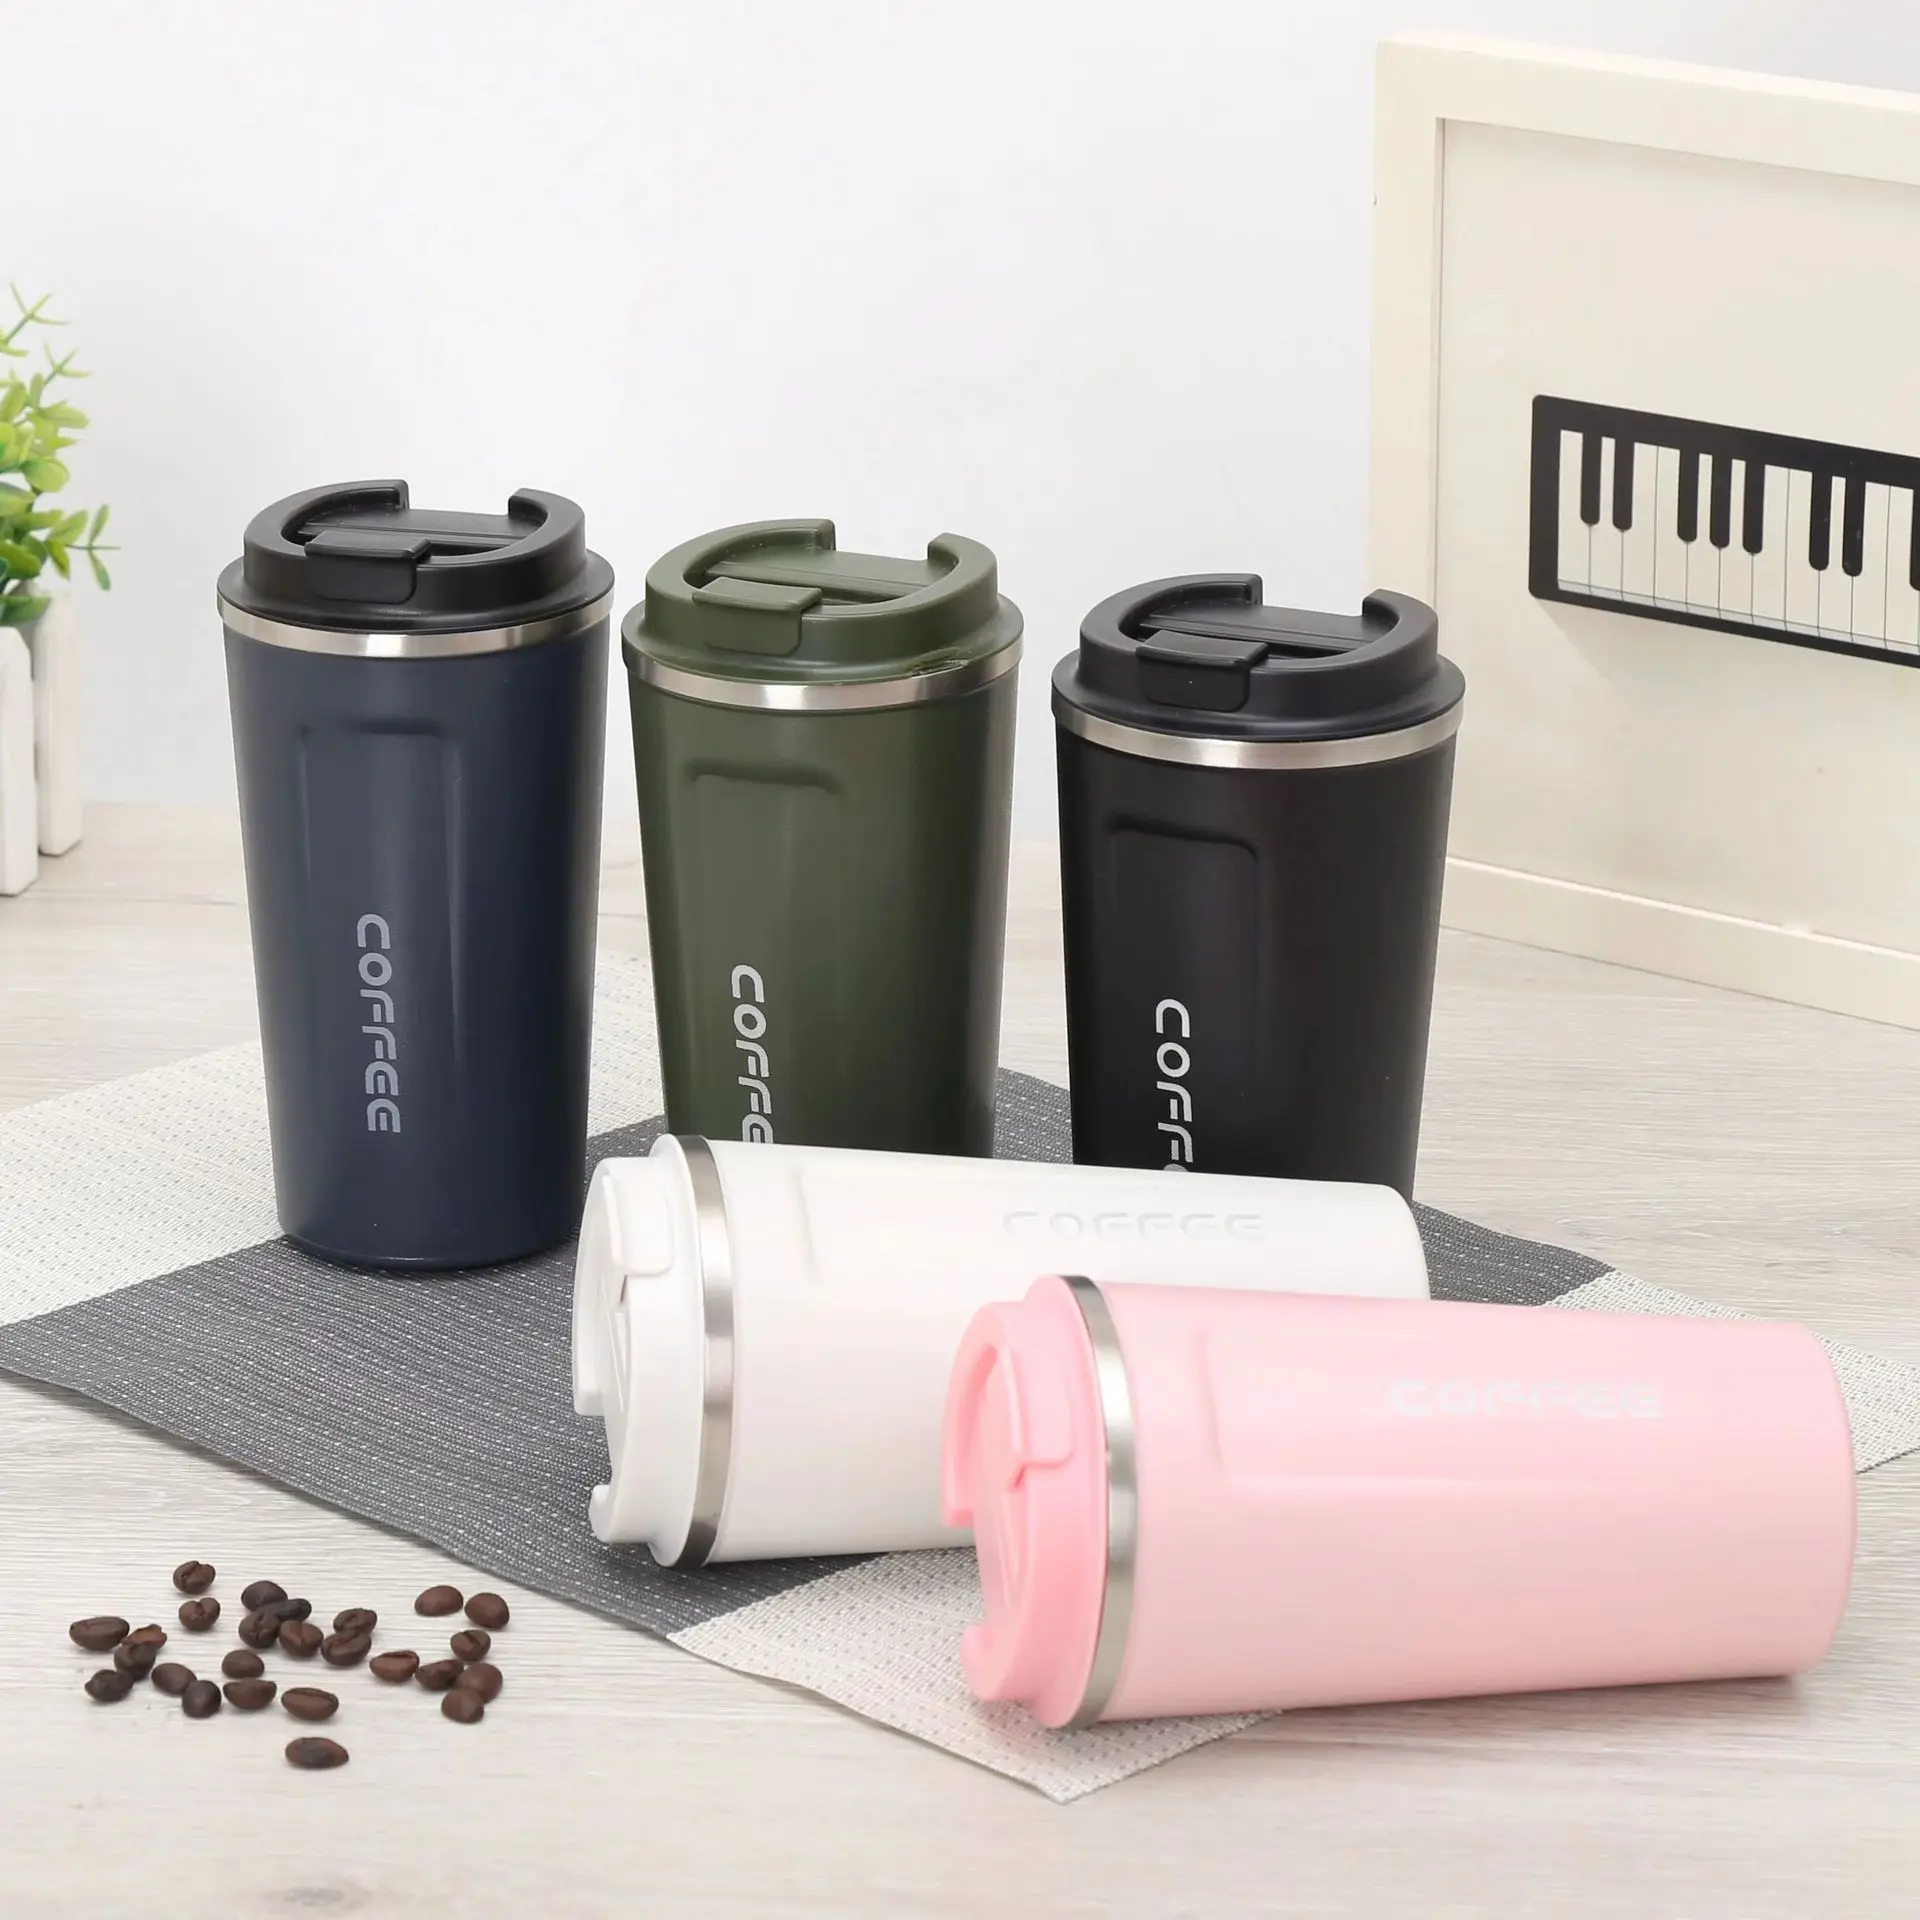 https://ae01.alicdn.com/kf/Sdaab3dbea4524ff4a93459d123a82e7aA/510ml-Stainless-Steel-Smart-Coffee-Tumbler-Thermos-Cup-with-Intelligent-Temperature-Display-Portable-Travel-Mug.jpg